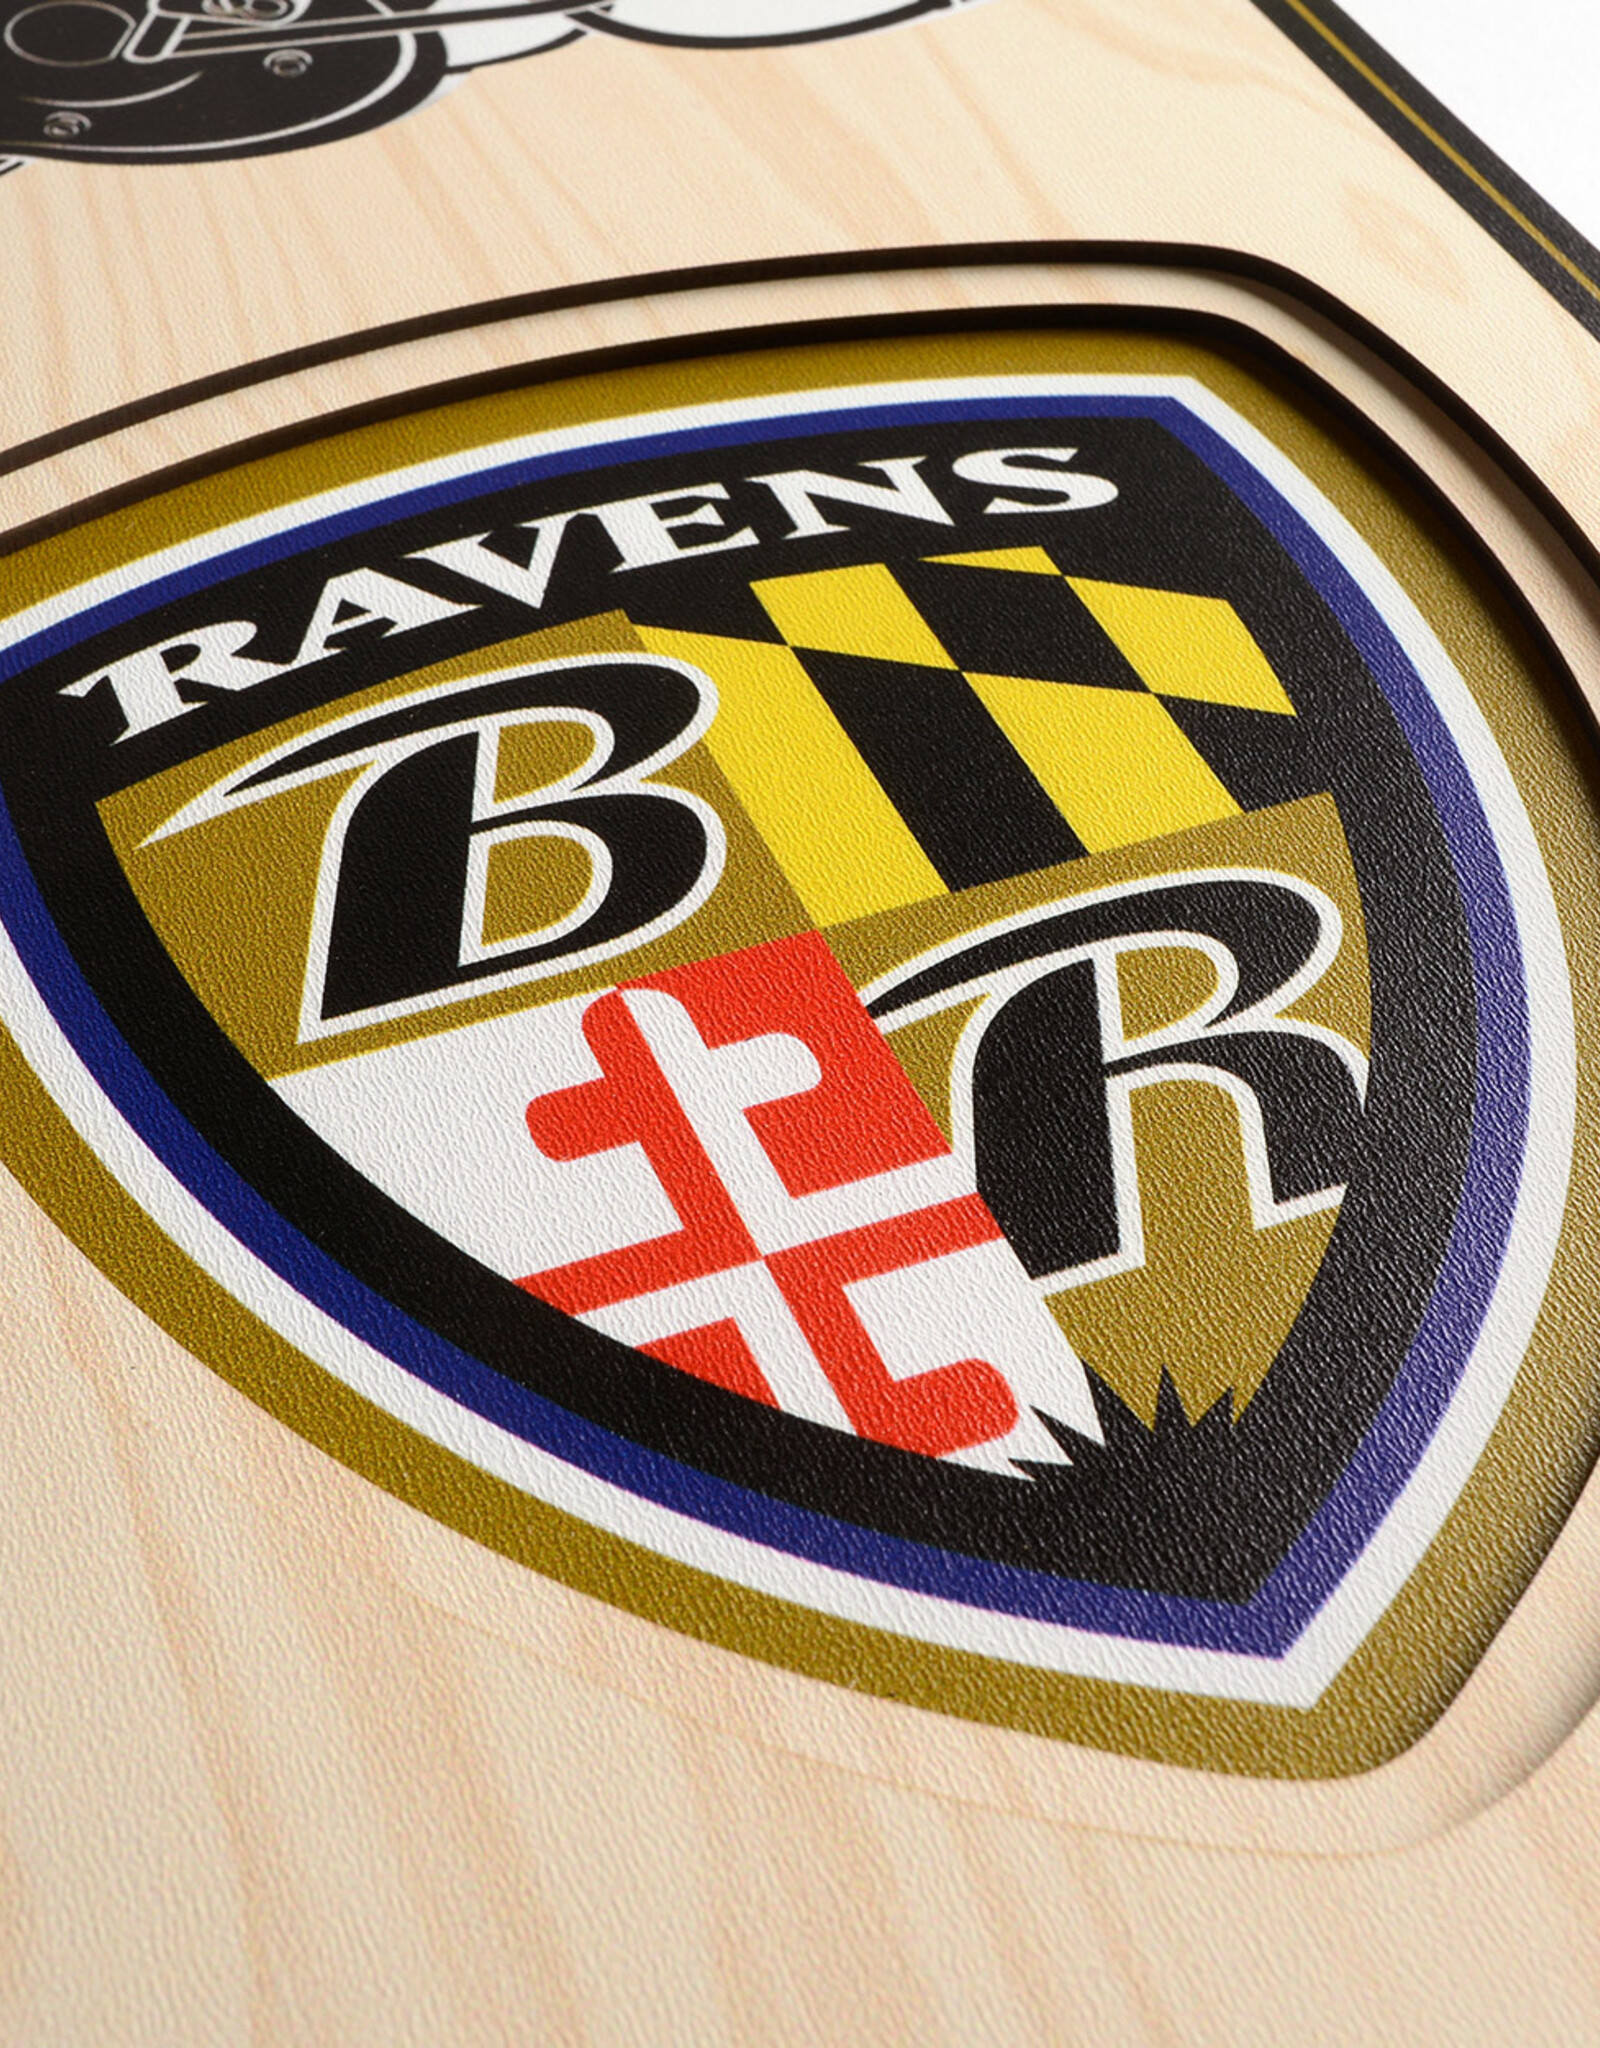 YOU THE FAN Baltimore Ravens 3D StadiumView 8x32 Banner